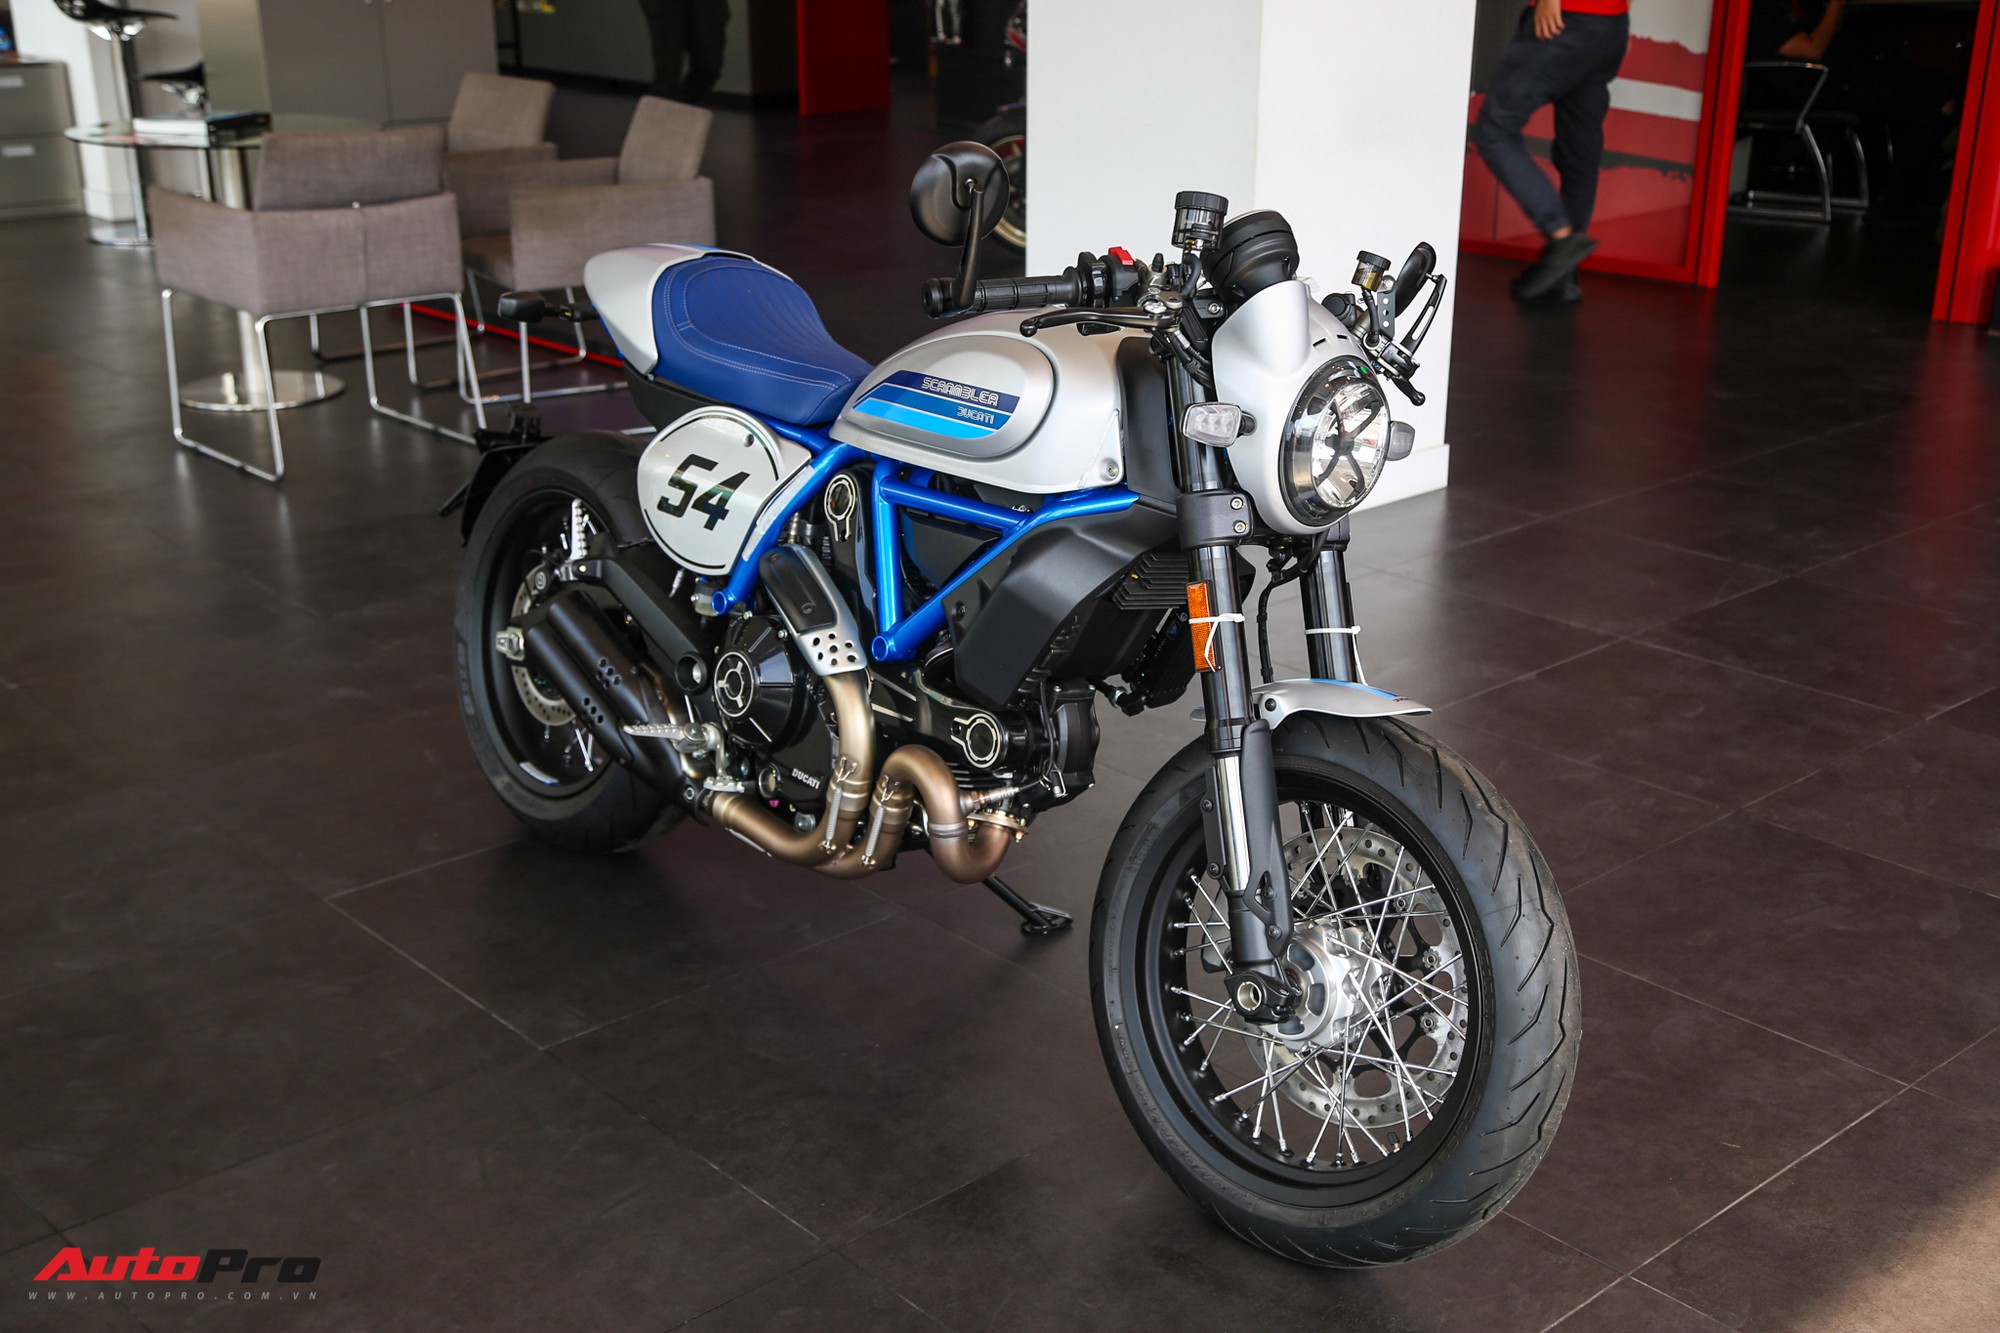 Ducati ra mắt xe môtô Scrambler Icon Dark 2020 giá vừa túi tiền